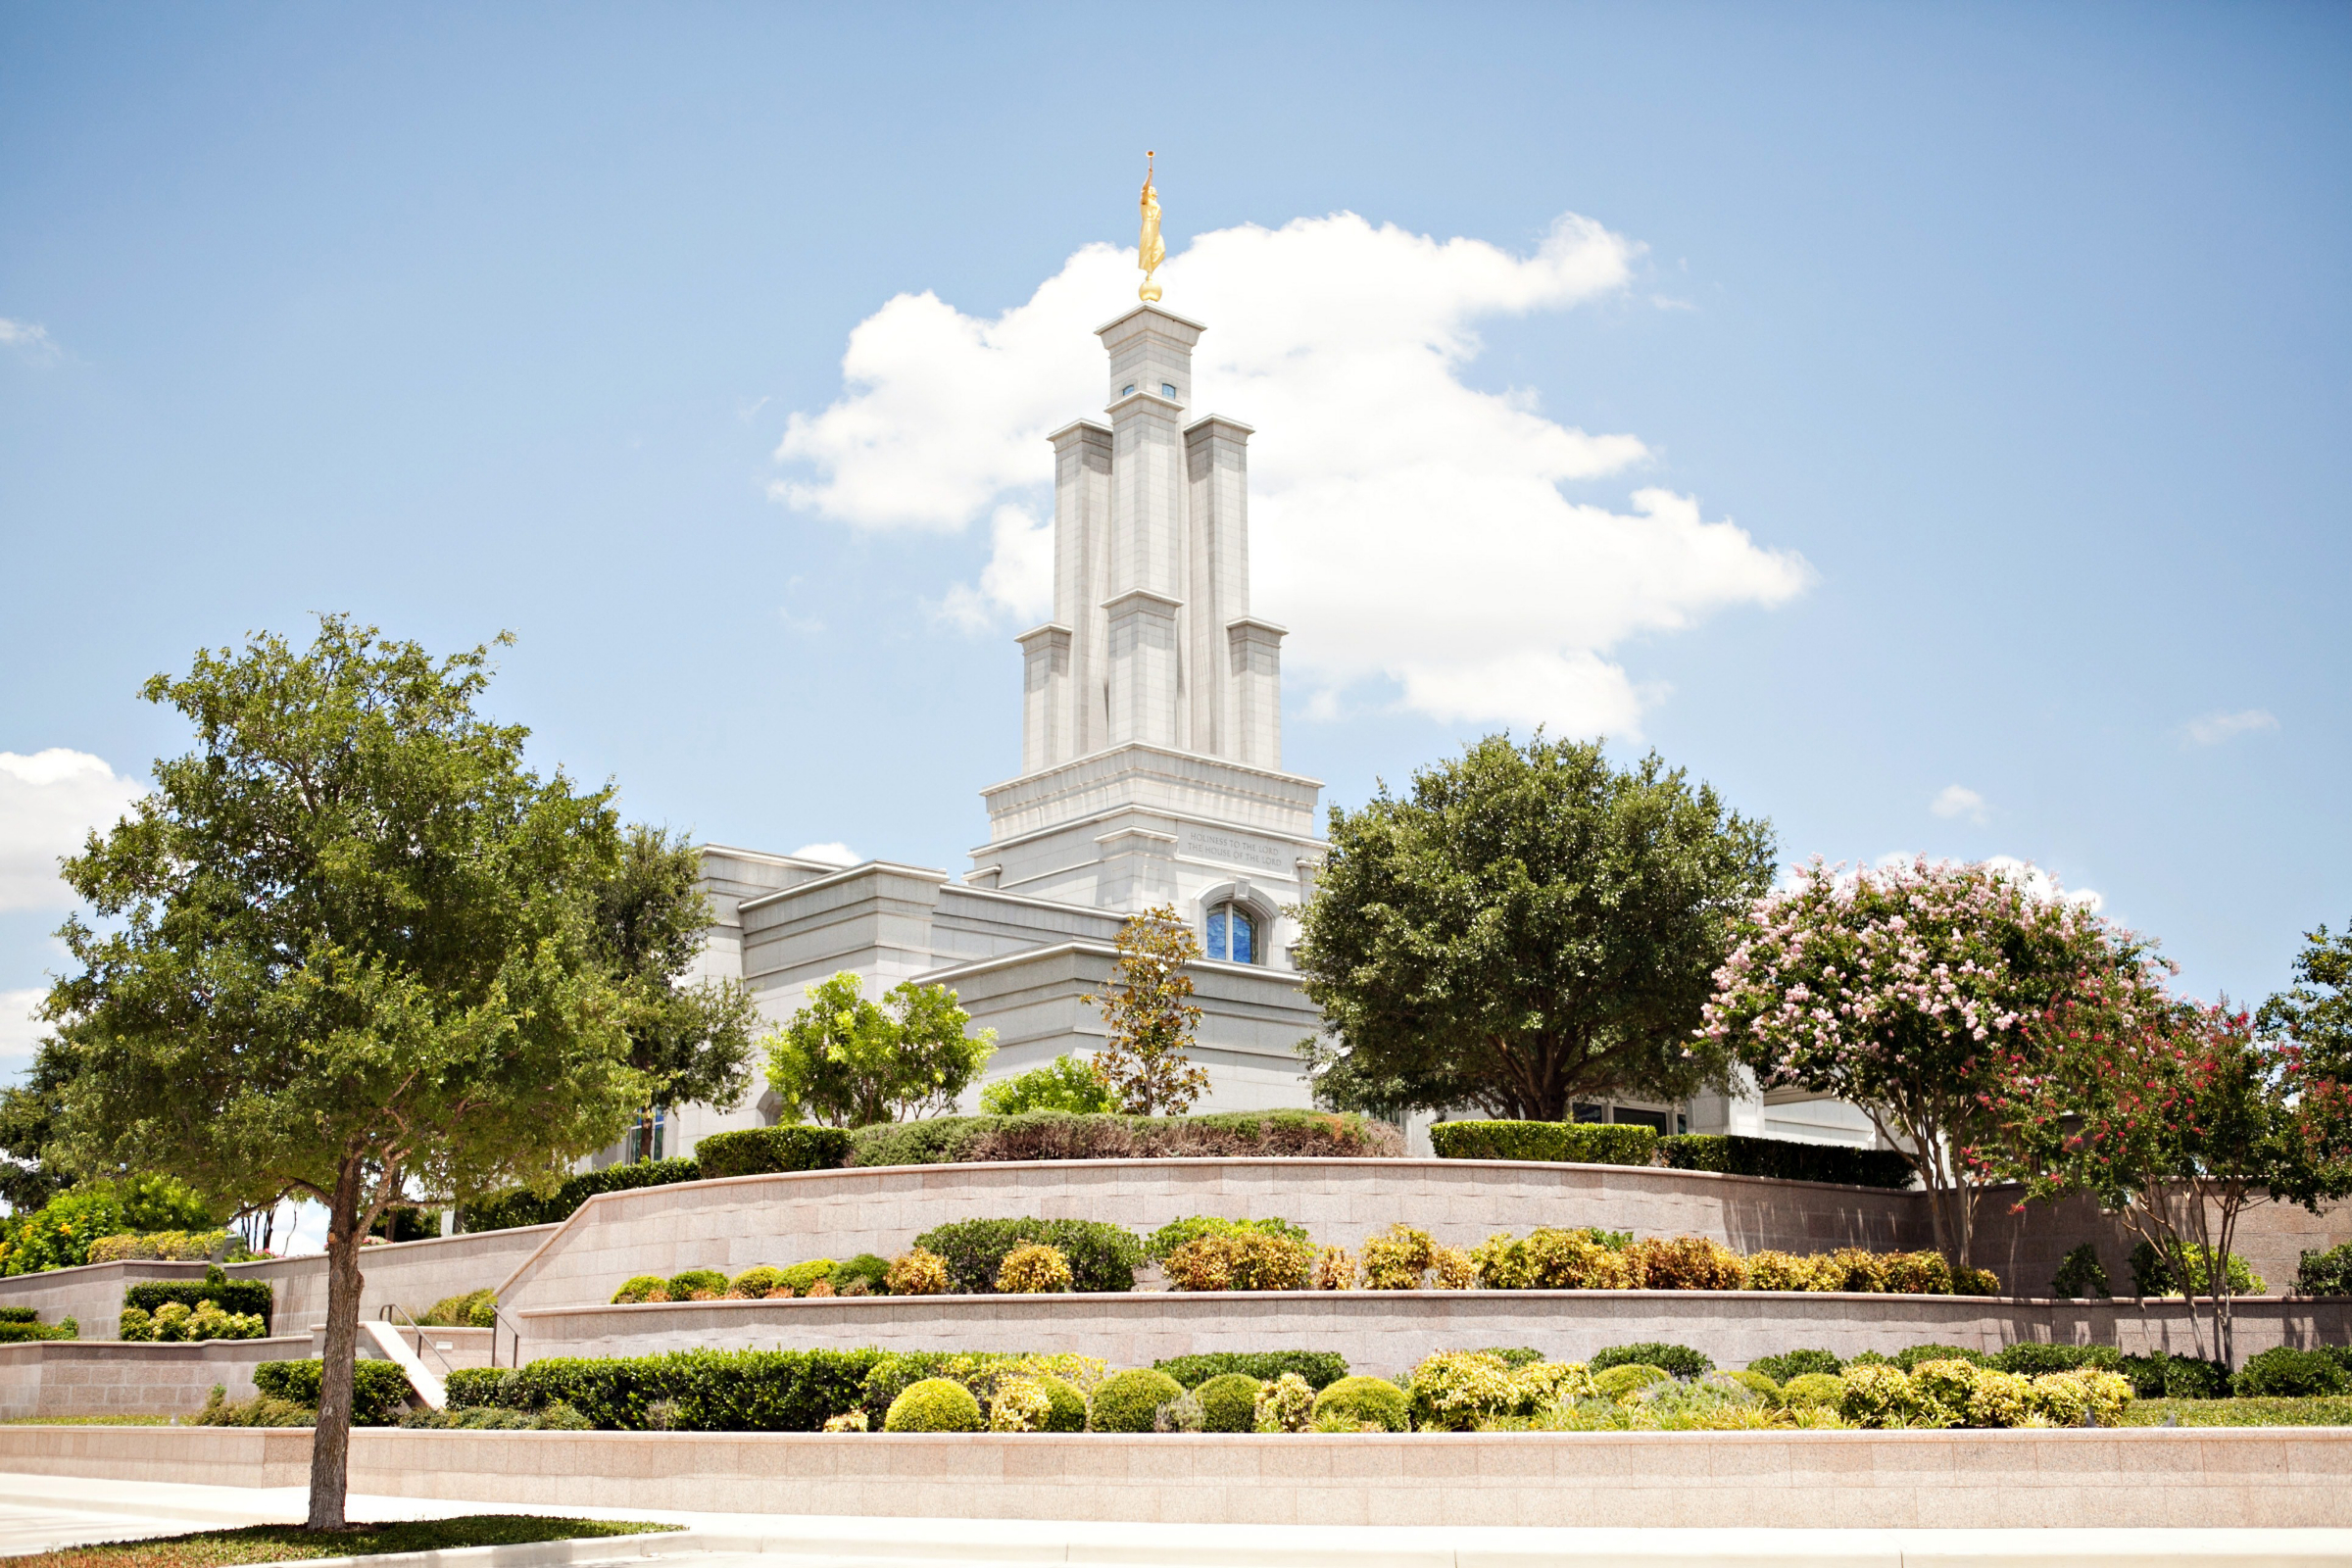 The Church of Jesus Christ of Latter-day Saints | 16500 124th Ave NE, Woodinville, WA, 98072 | +1 (425) 488-7132